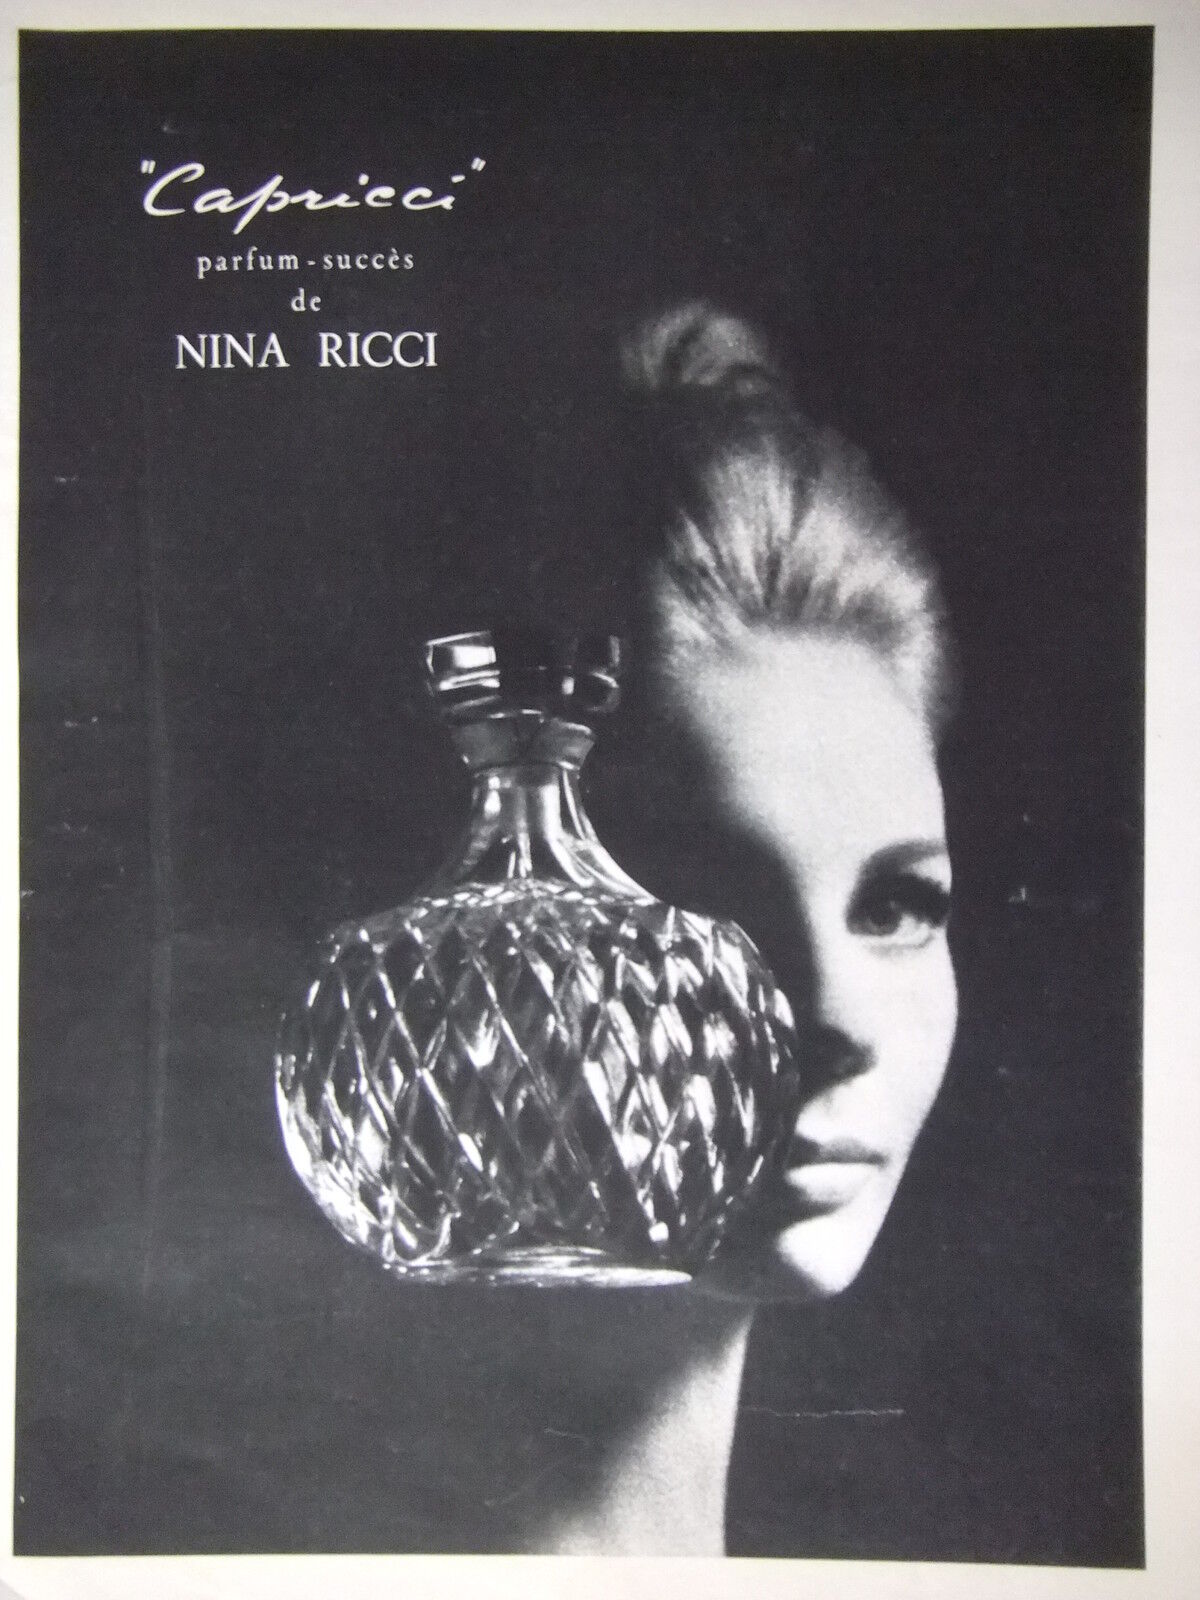 1963 CAPRICCI SUCC`S PERFUME PRESS ADVERTISEMENT BY NINA RICCI - ADVERTISING